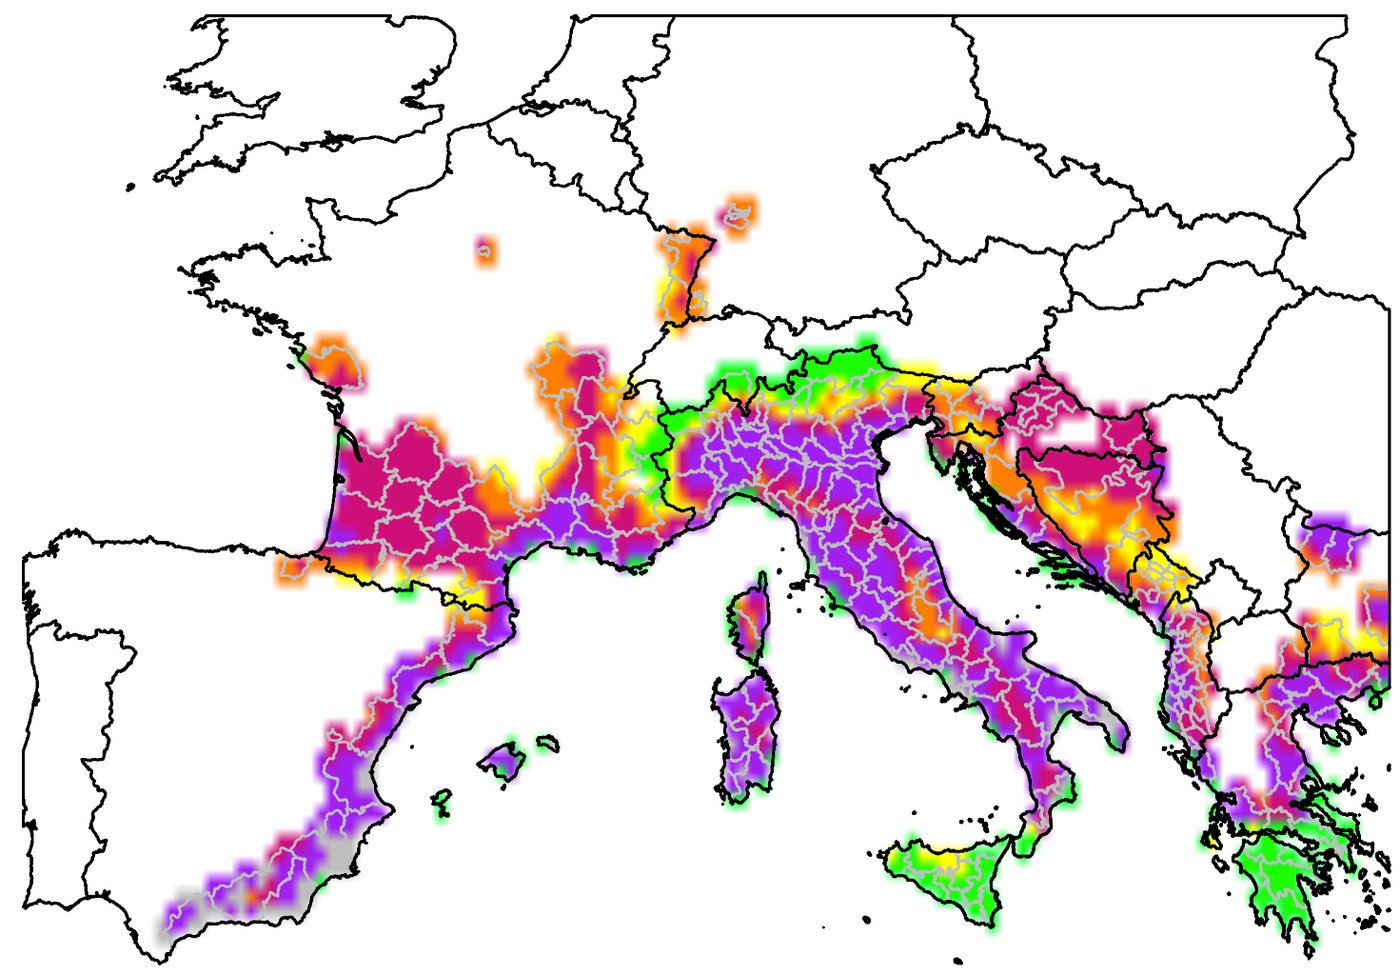 Risk map for the Chikungunya virus in Europe